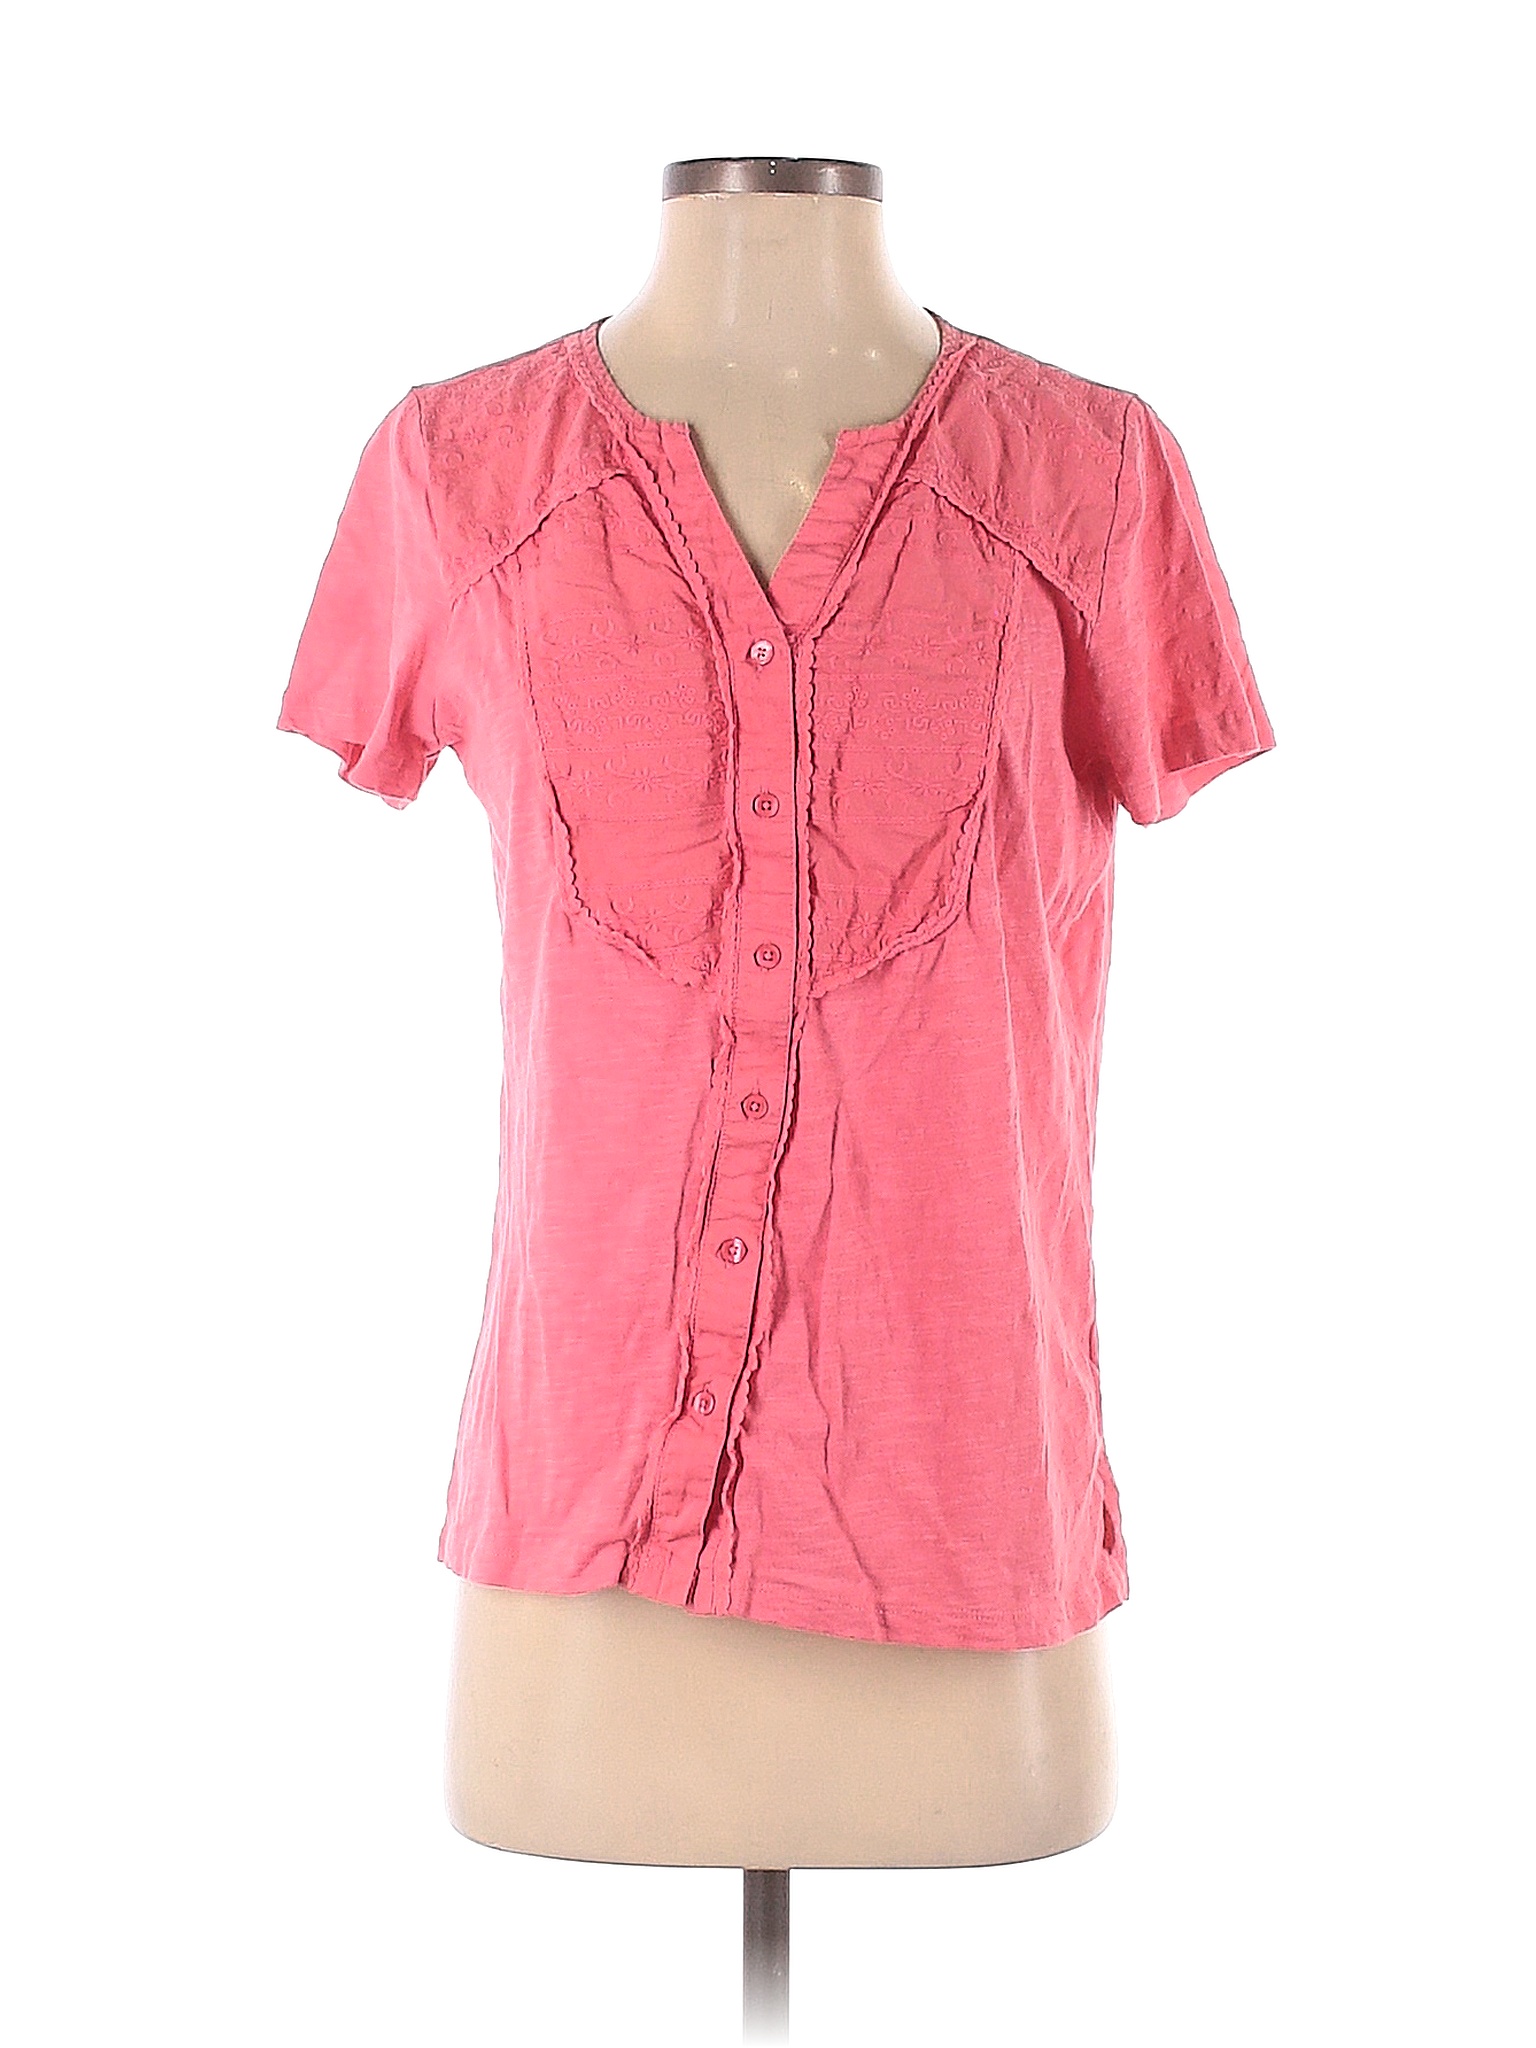 Erika Solid Pink Short Sleeve Blouse Size S - 73% off | thredUP